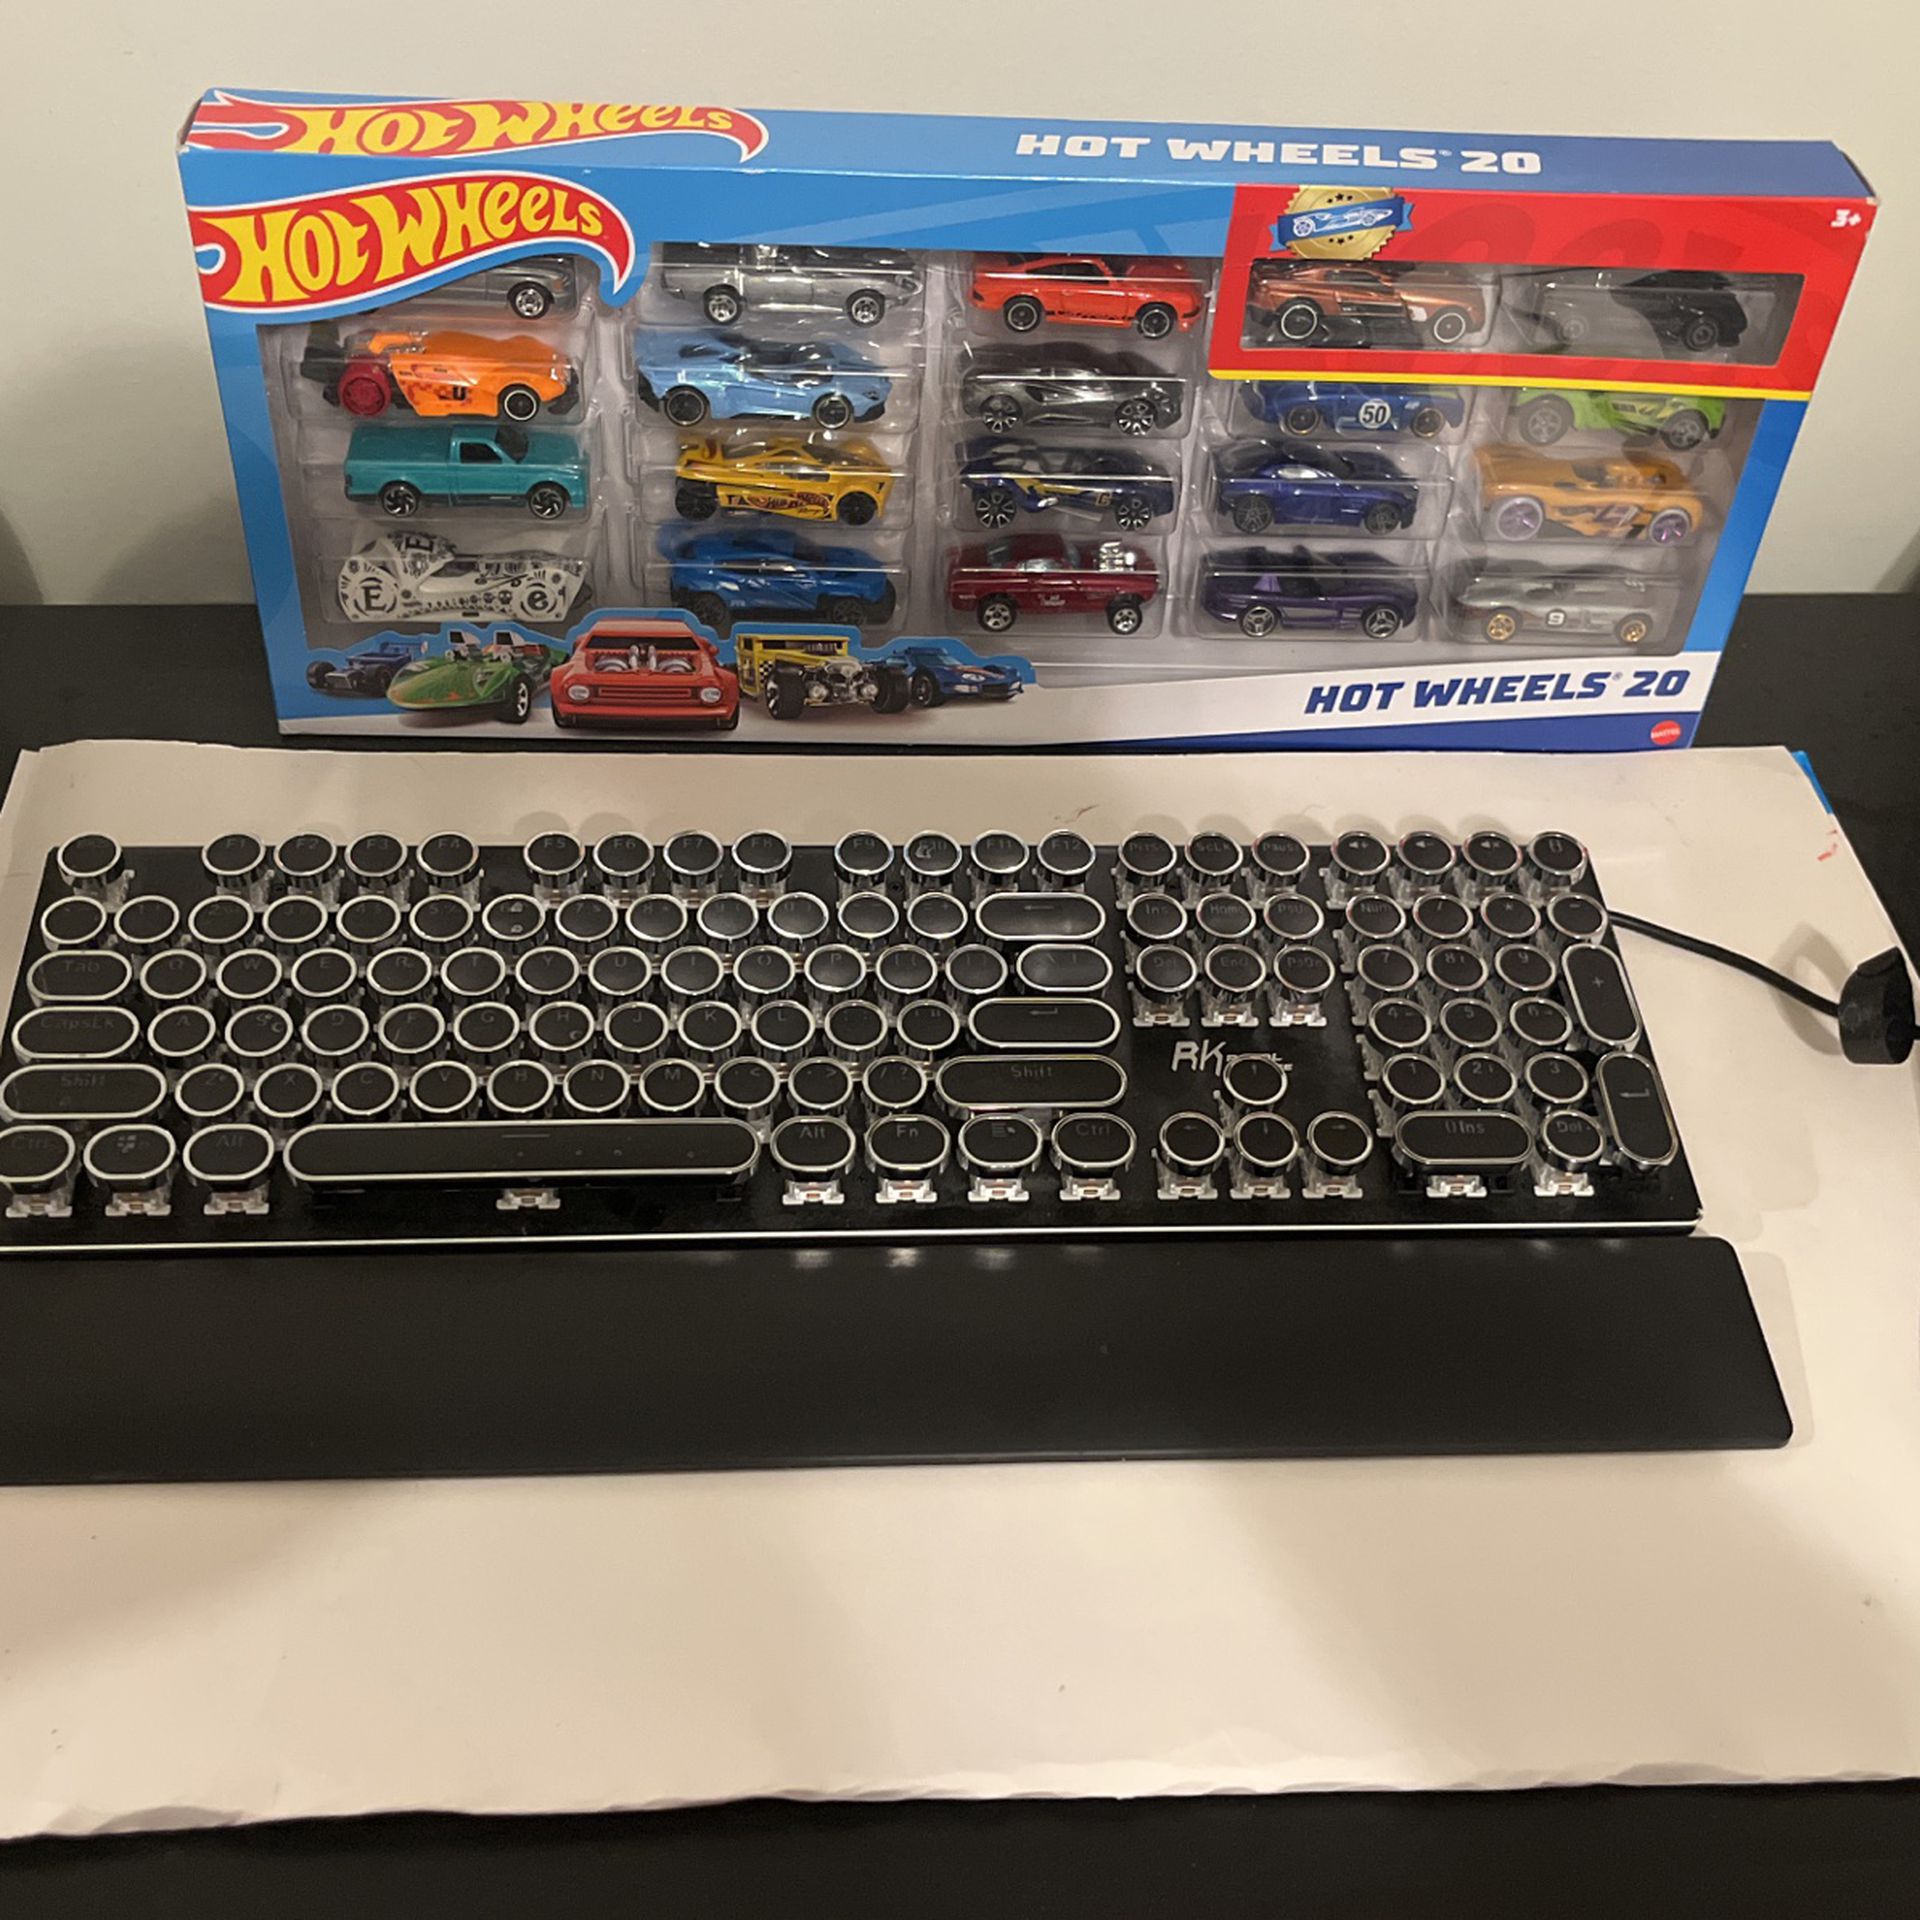 Royal Kludge Mechanical Gaming Keyboard 